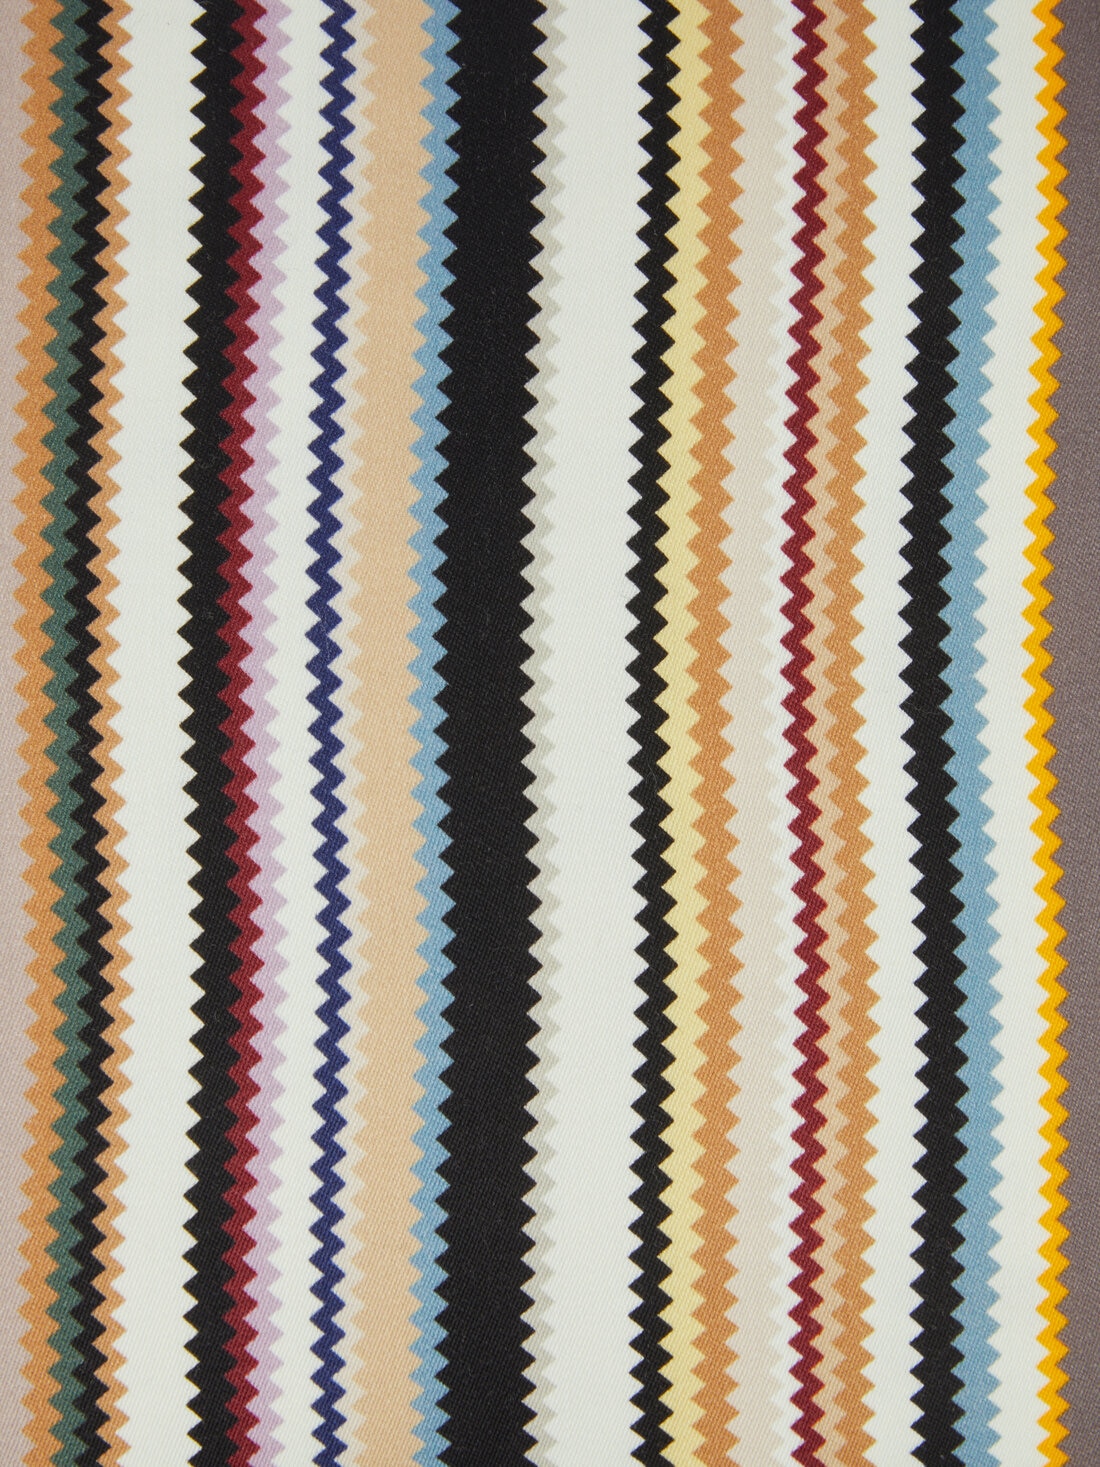 40x40 cm Shangai wool satin cushion with zig zag print, Black    - 8051575837517 - 3